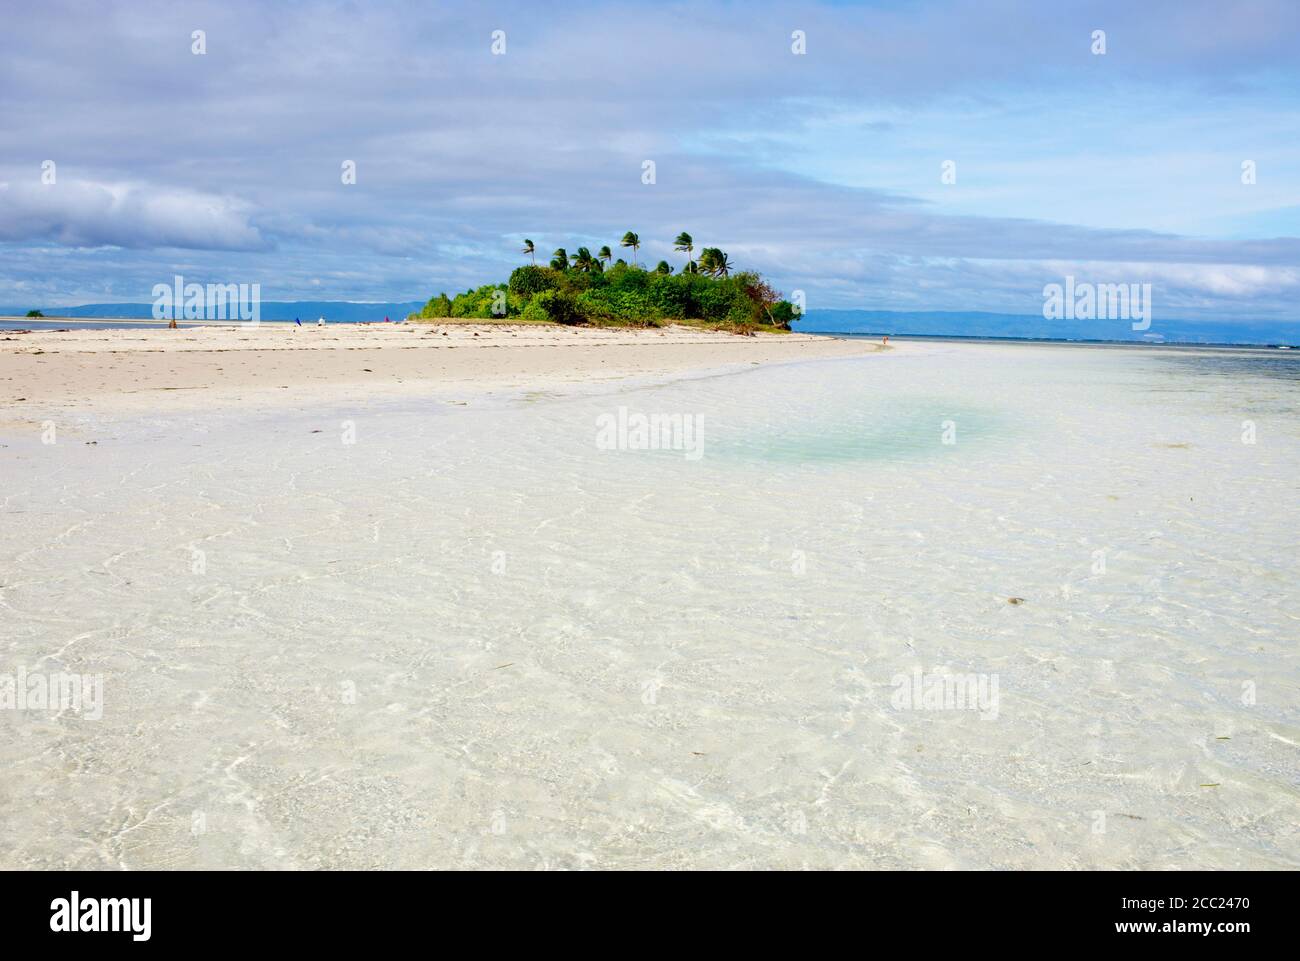 Philippines, Visayas islands, Bohol island, panglao, Puntod island. Stock Photo